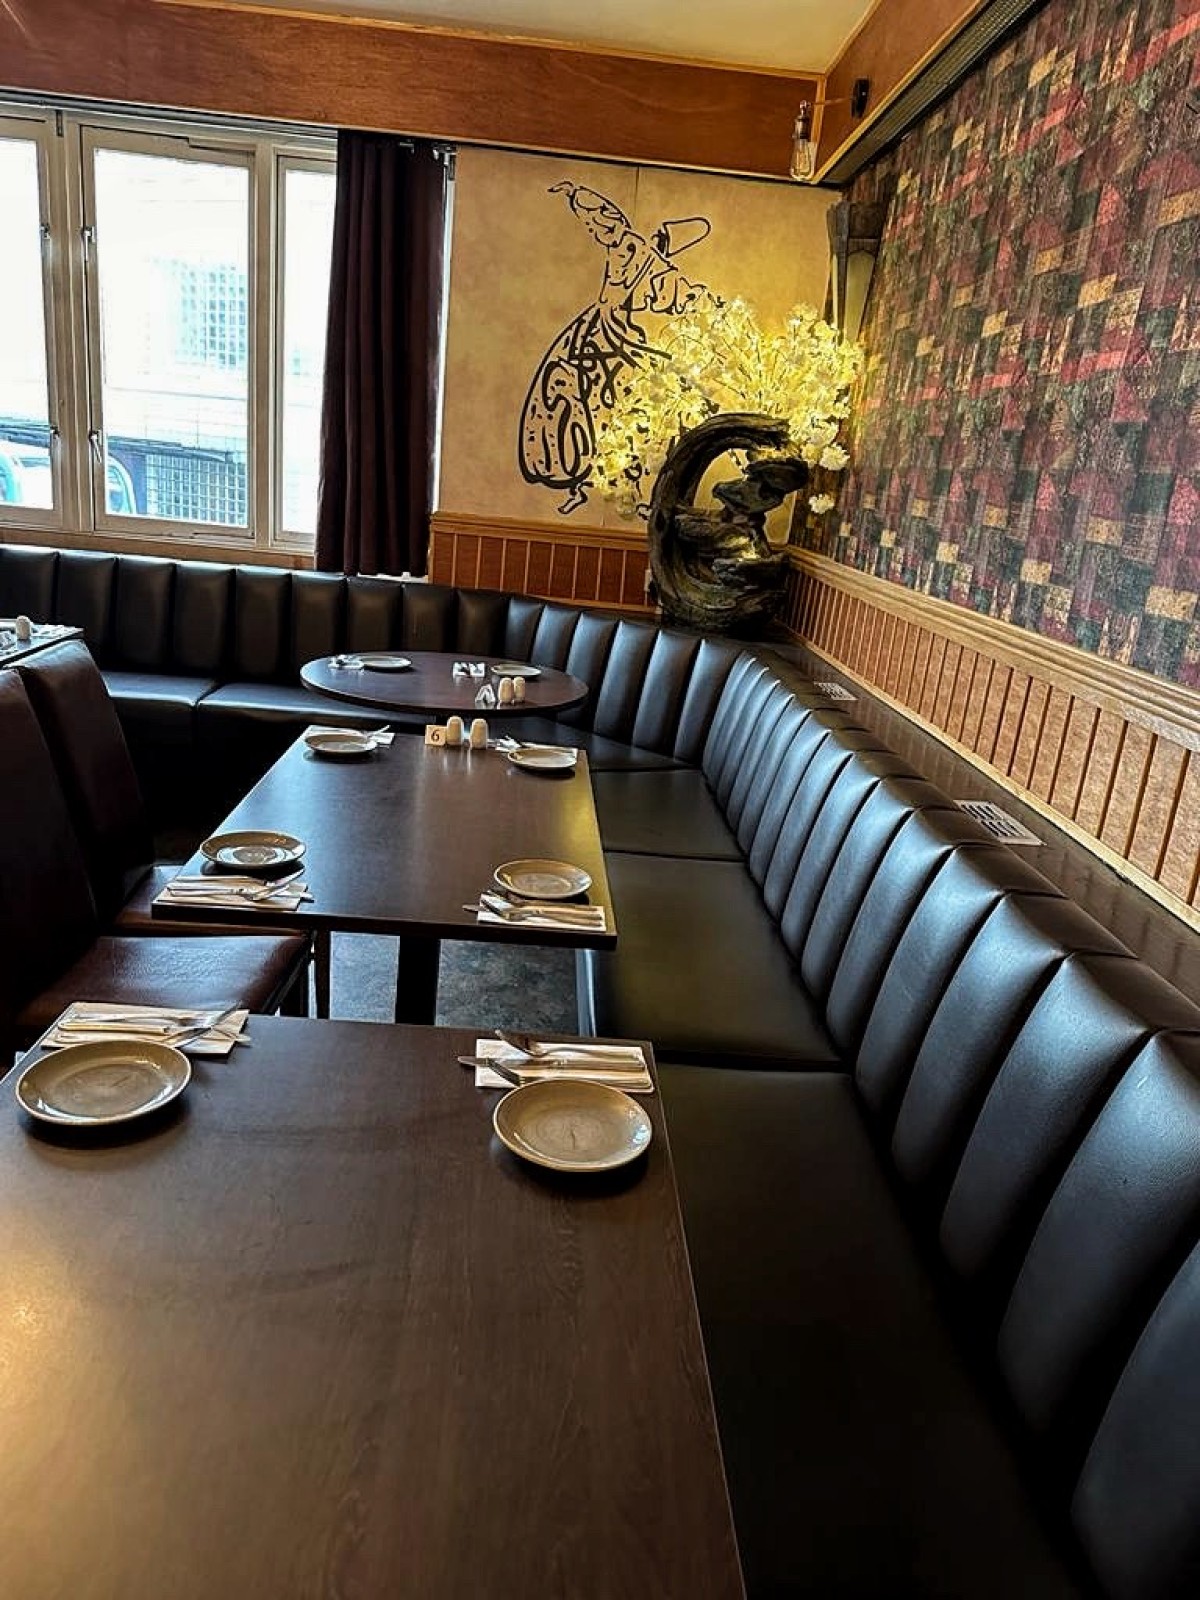 Persia Restaurant Dining Room